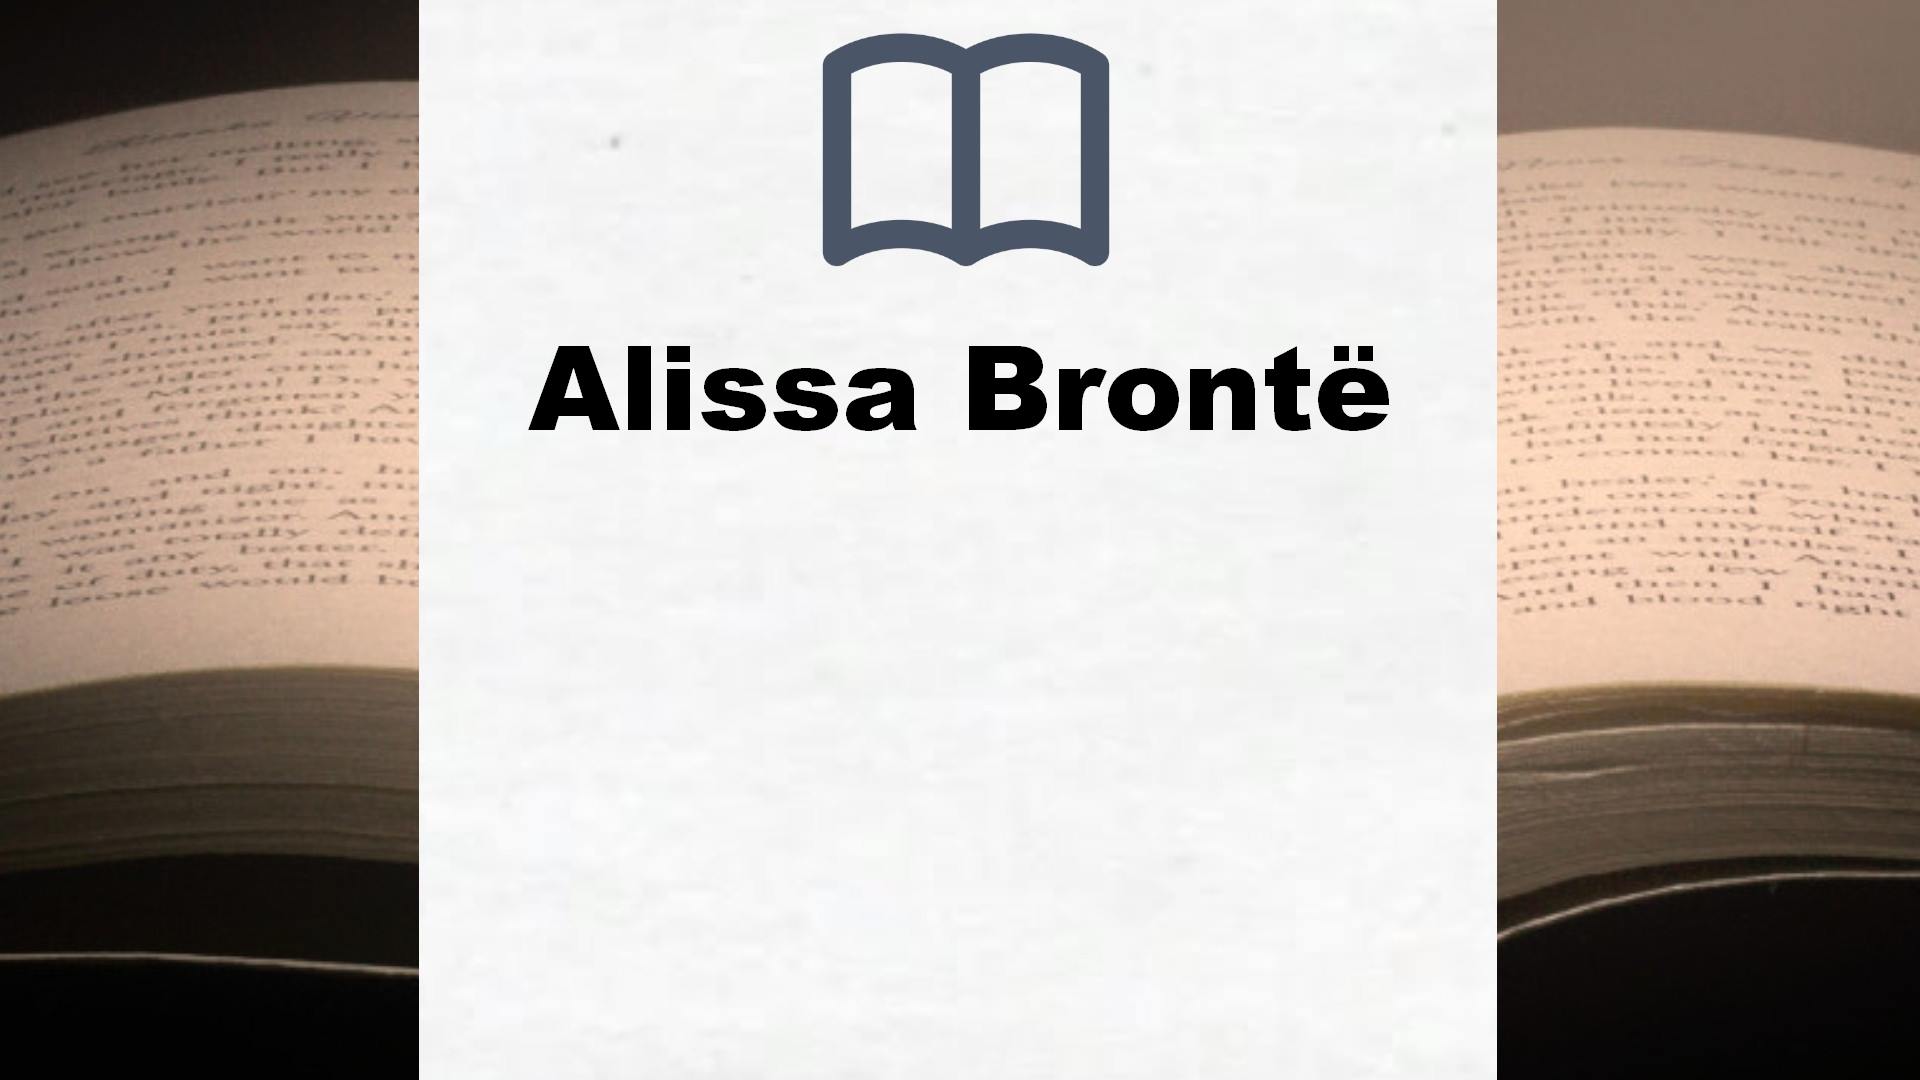 Libros Alissa Brontë